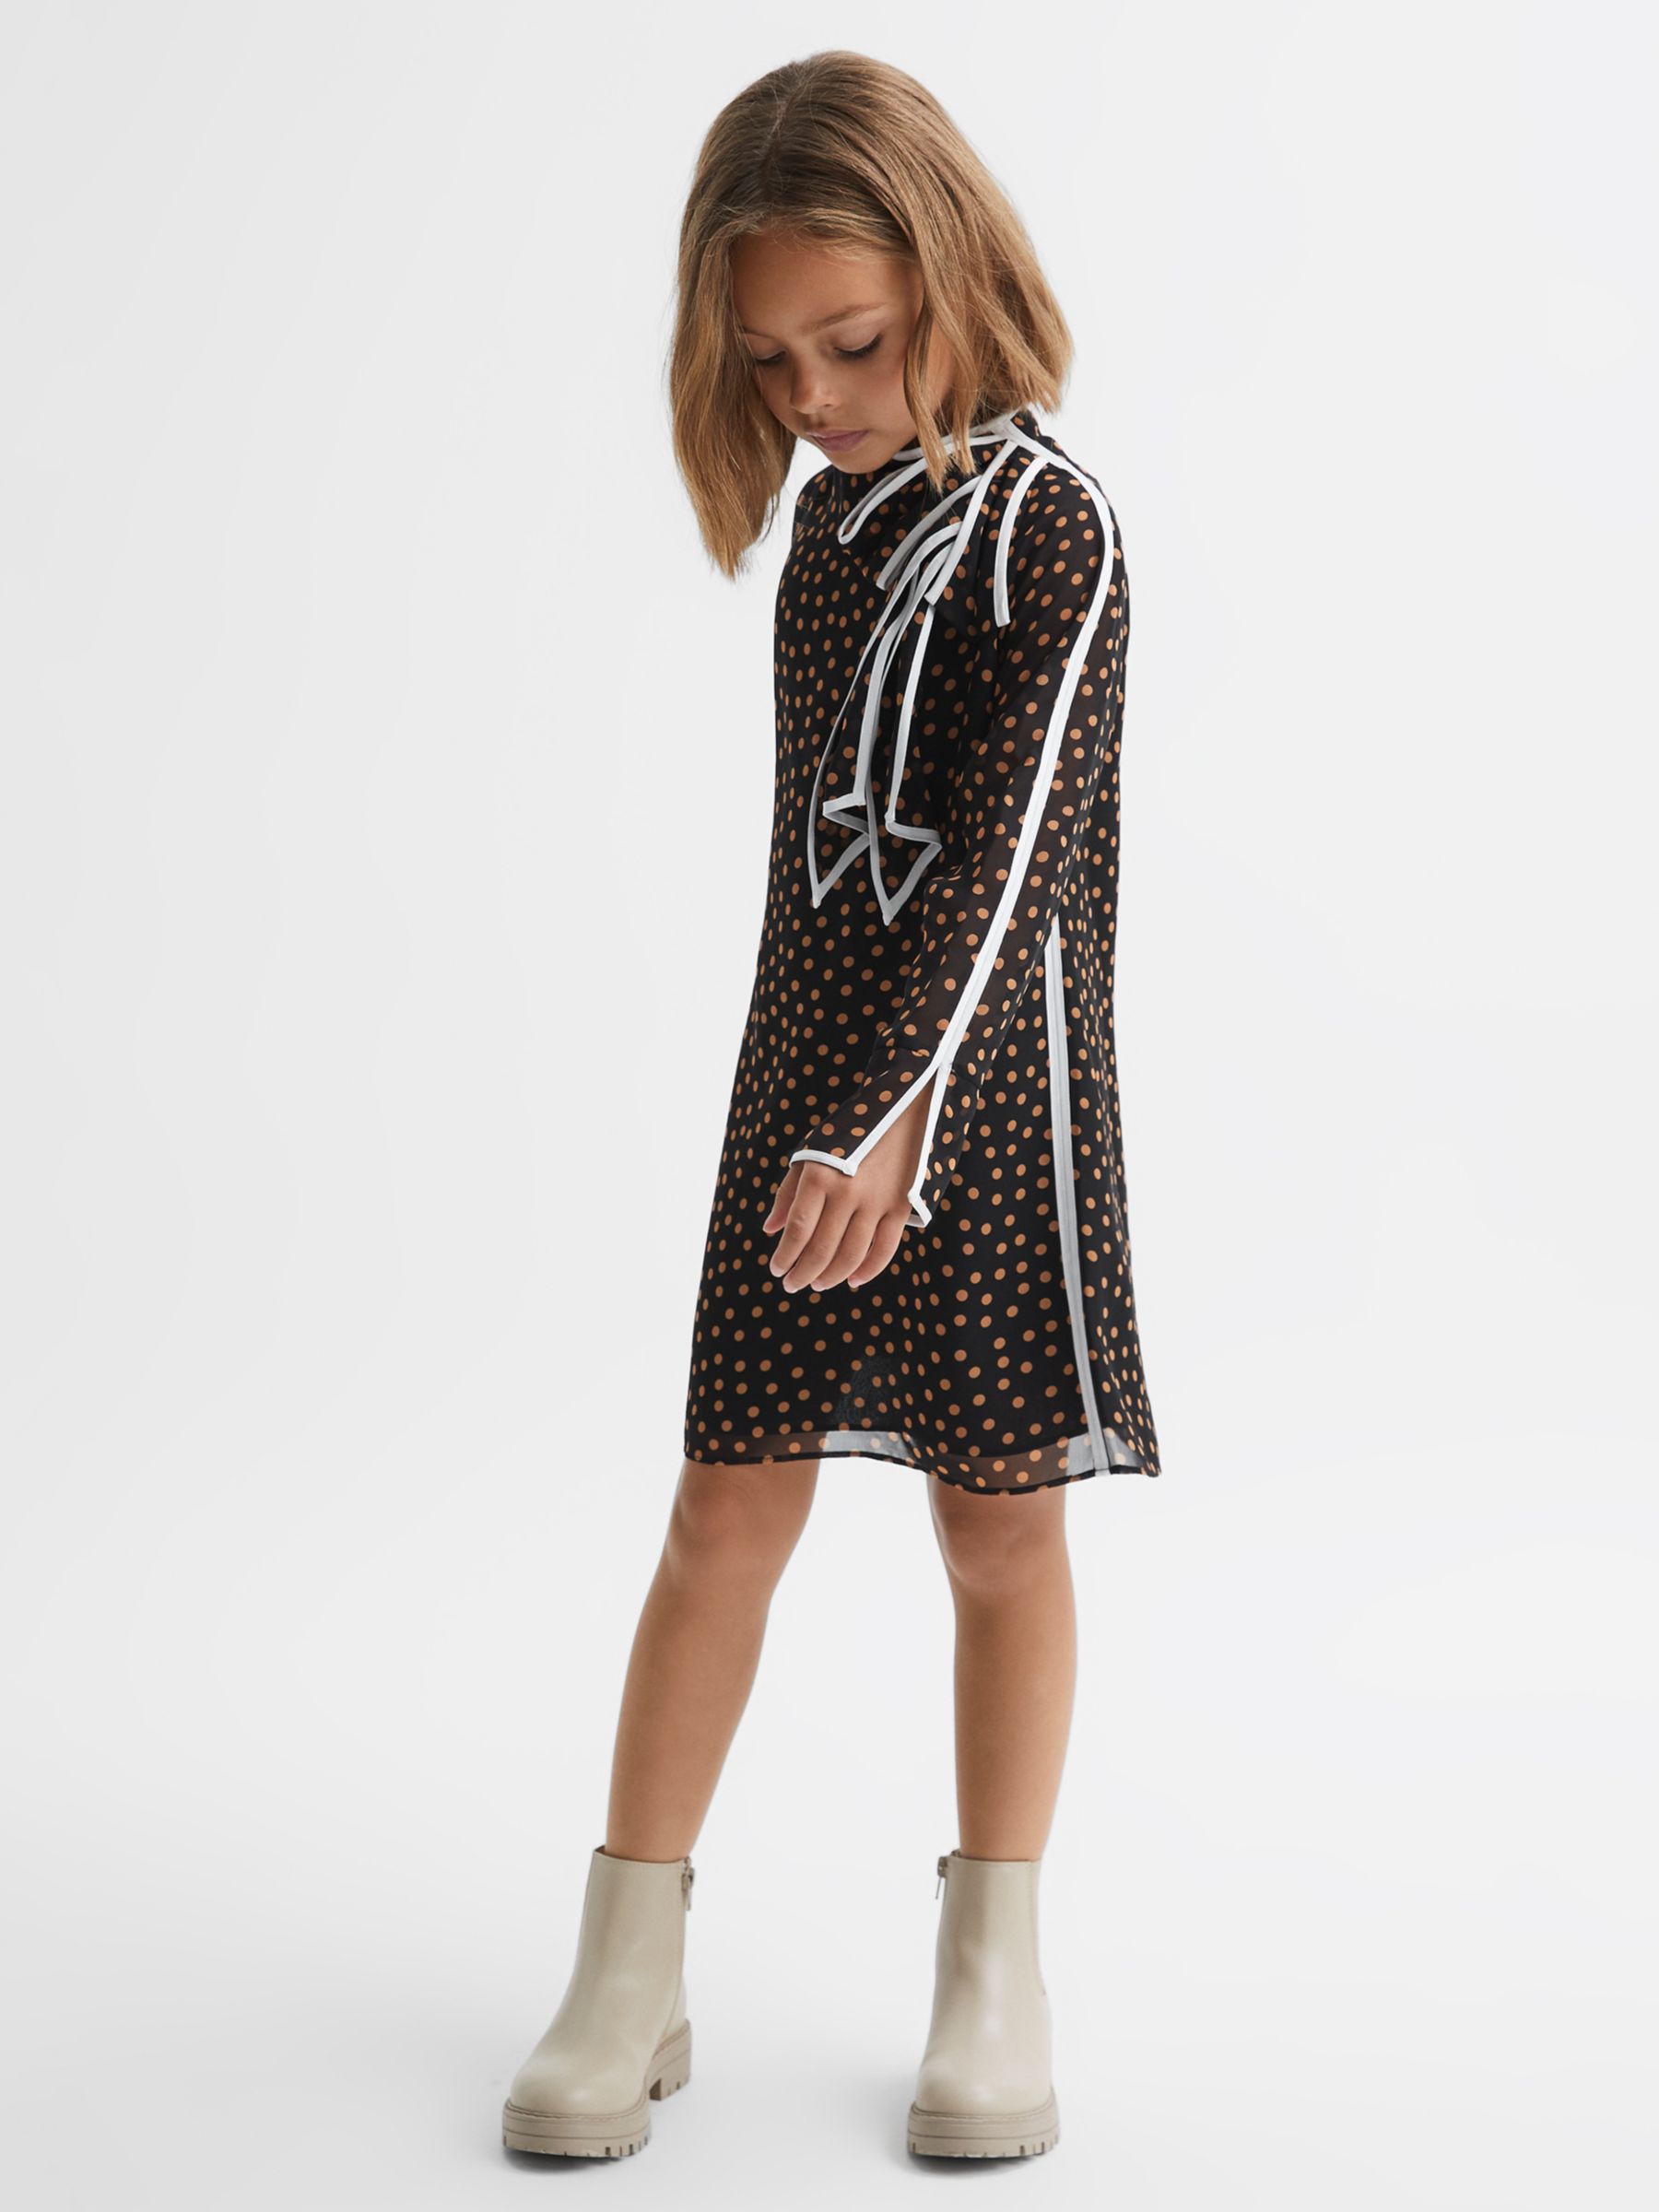 Reiss Kids' Kate Spot Dress, Black/Multi, 5-6 years